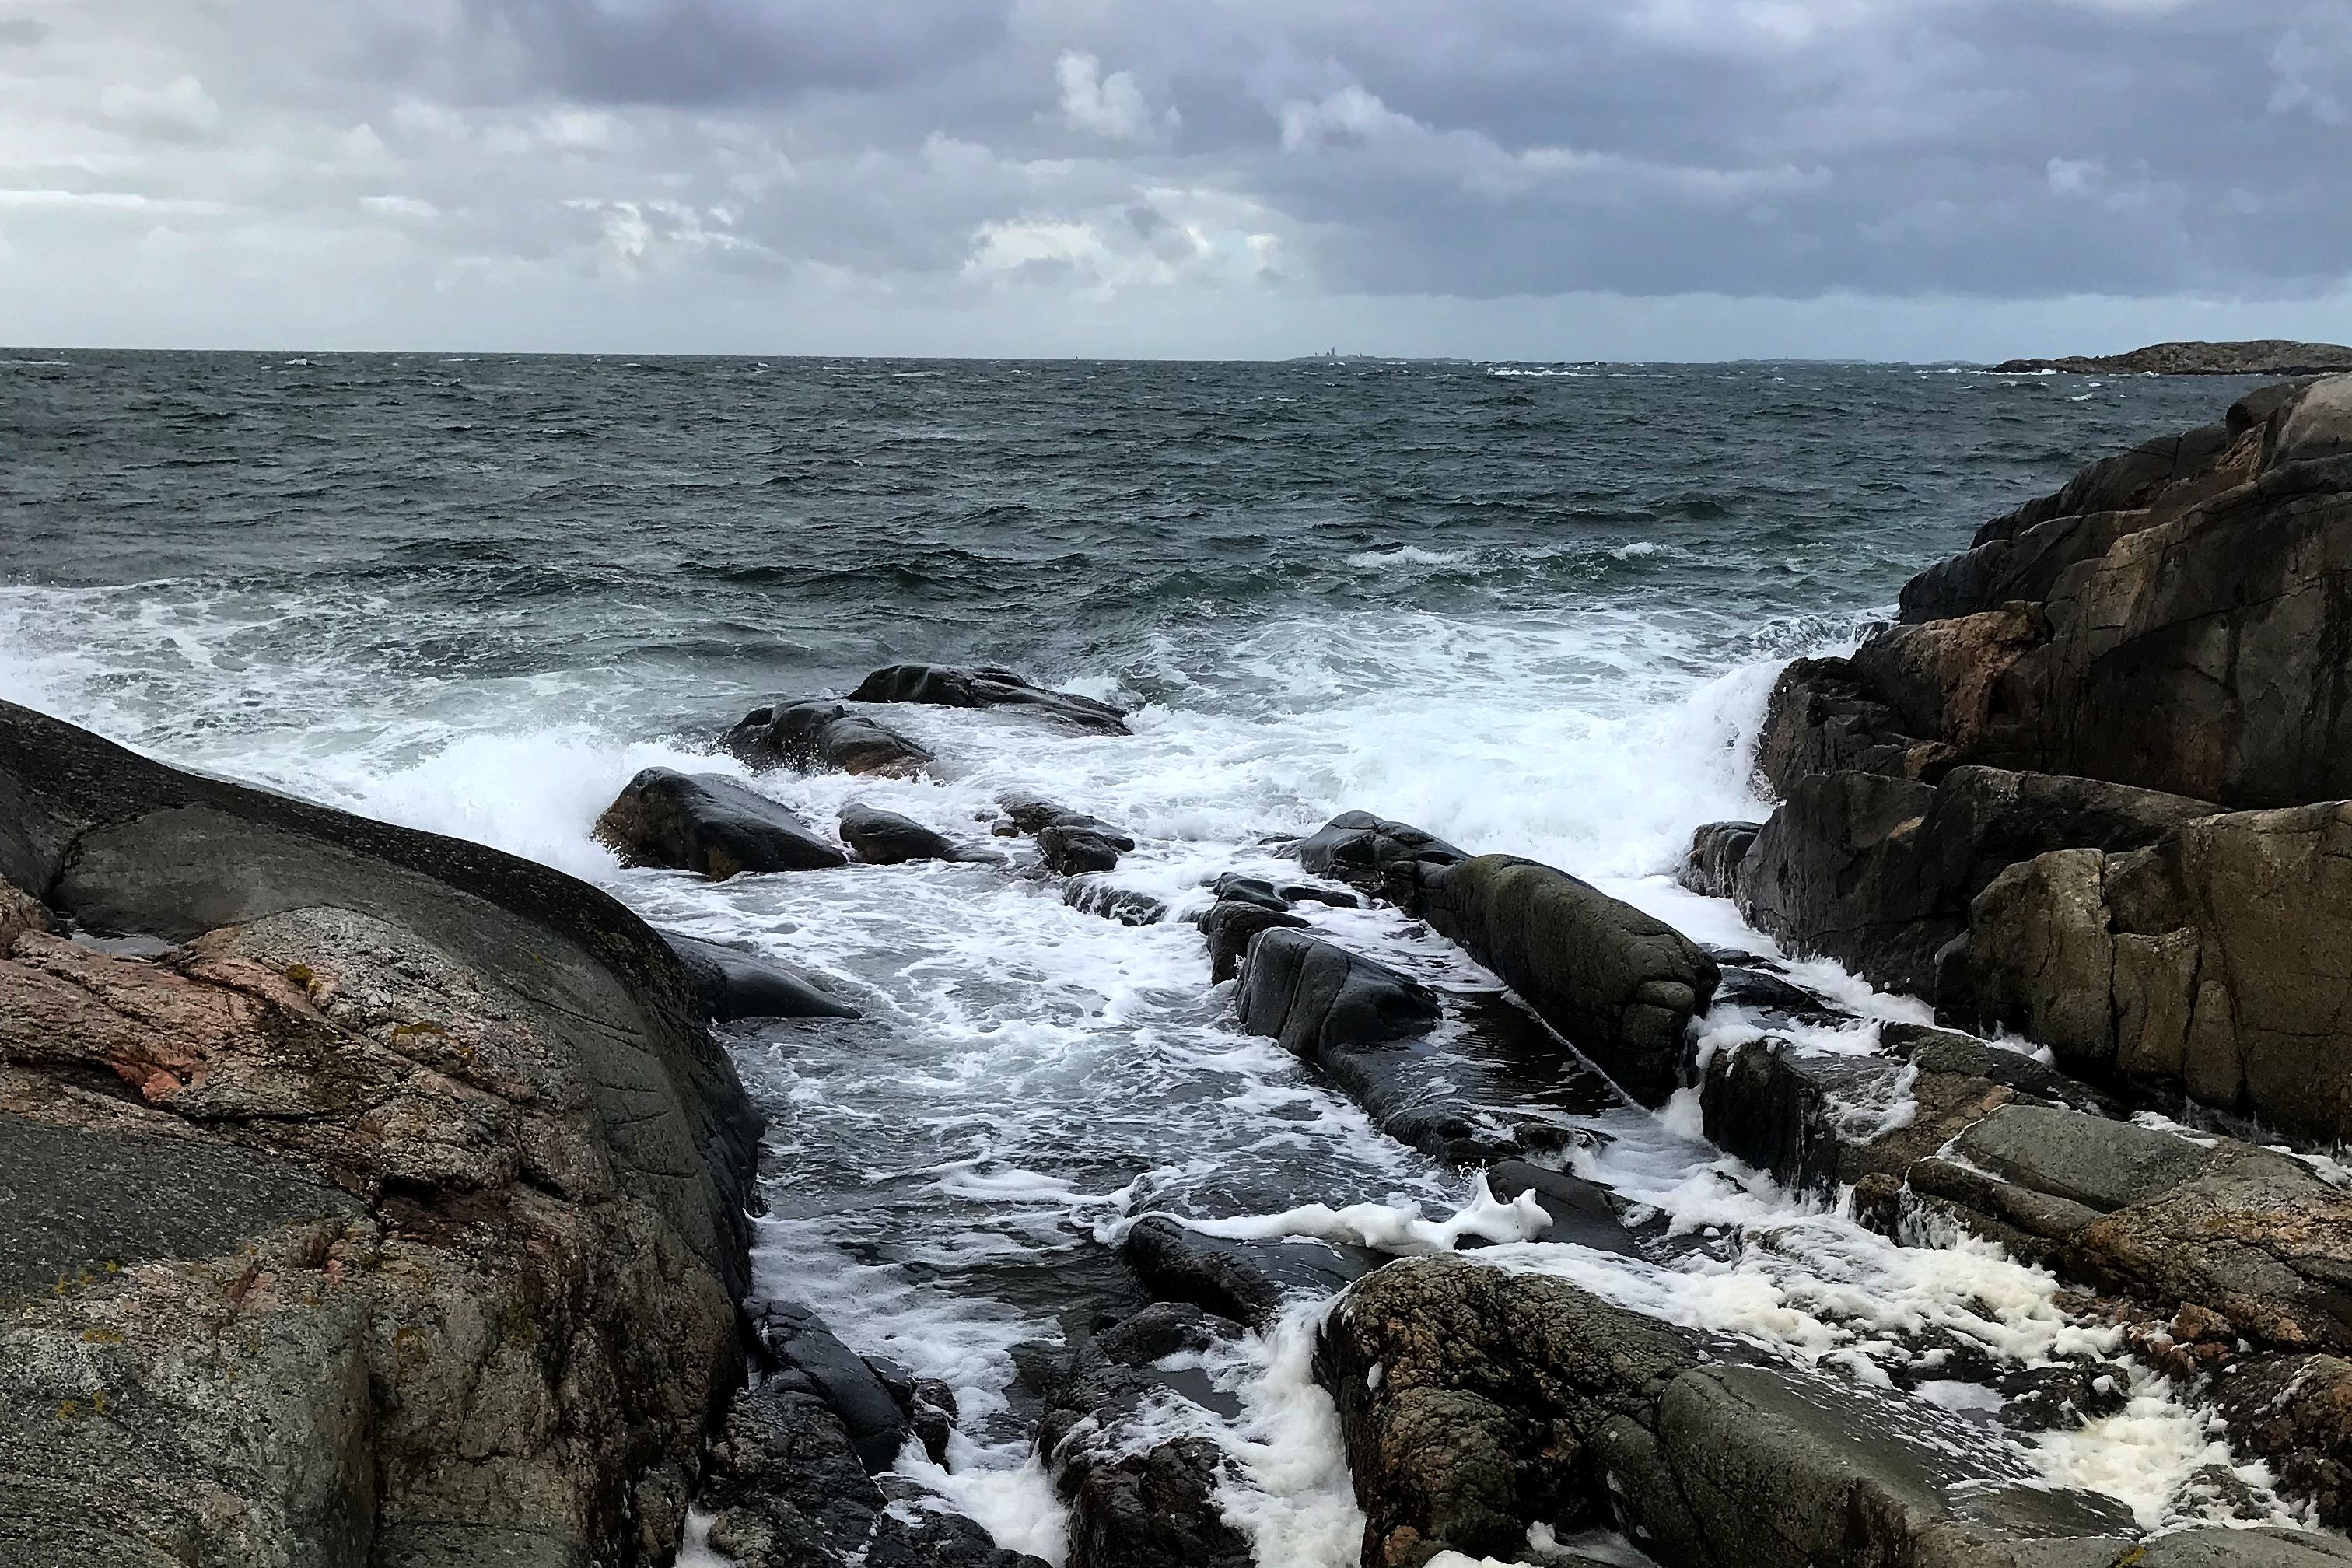 En bild på havet som slungar upp skummande vågor mot klipporna. Collecting sea kale seeds, a picture of the ocean waves.